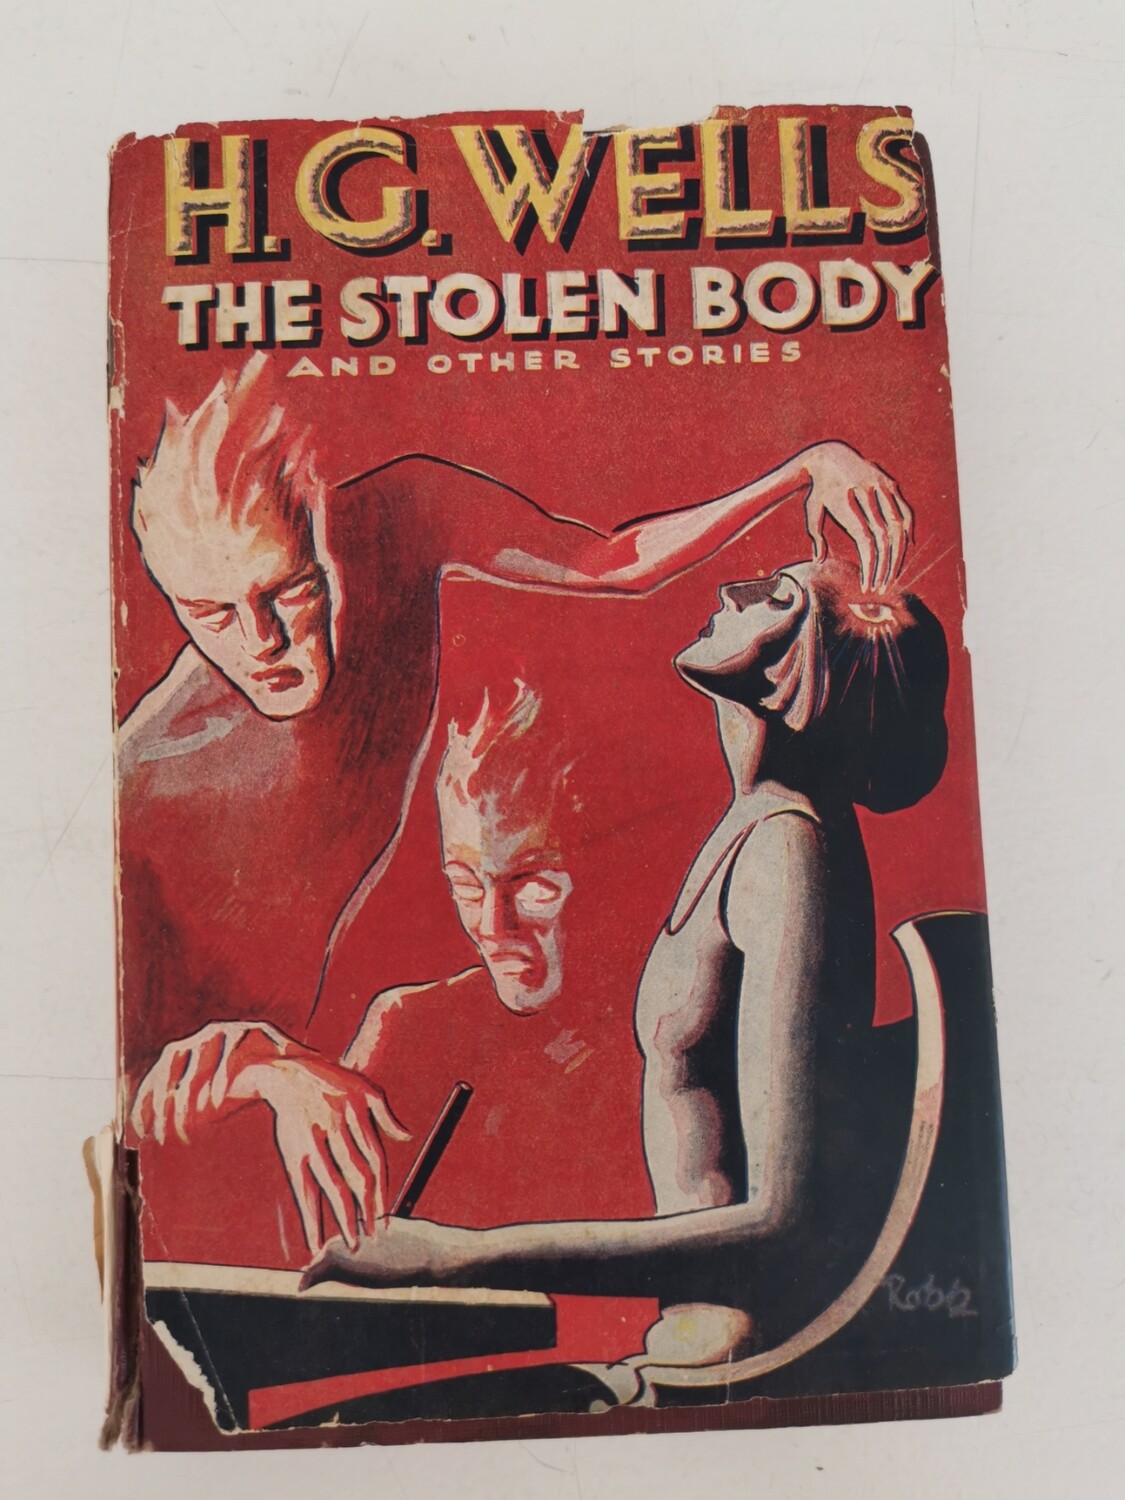 The stolen body, H. G. Wells